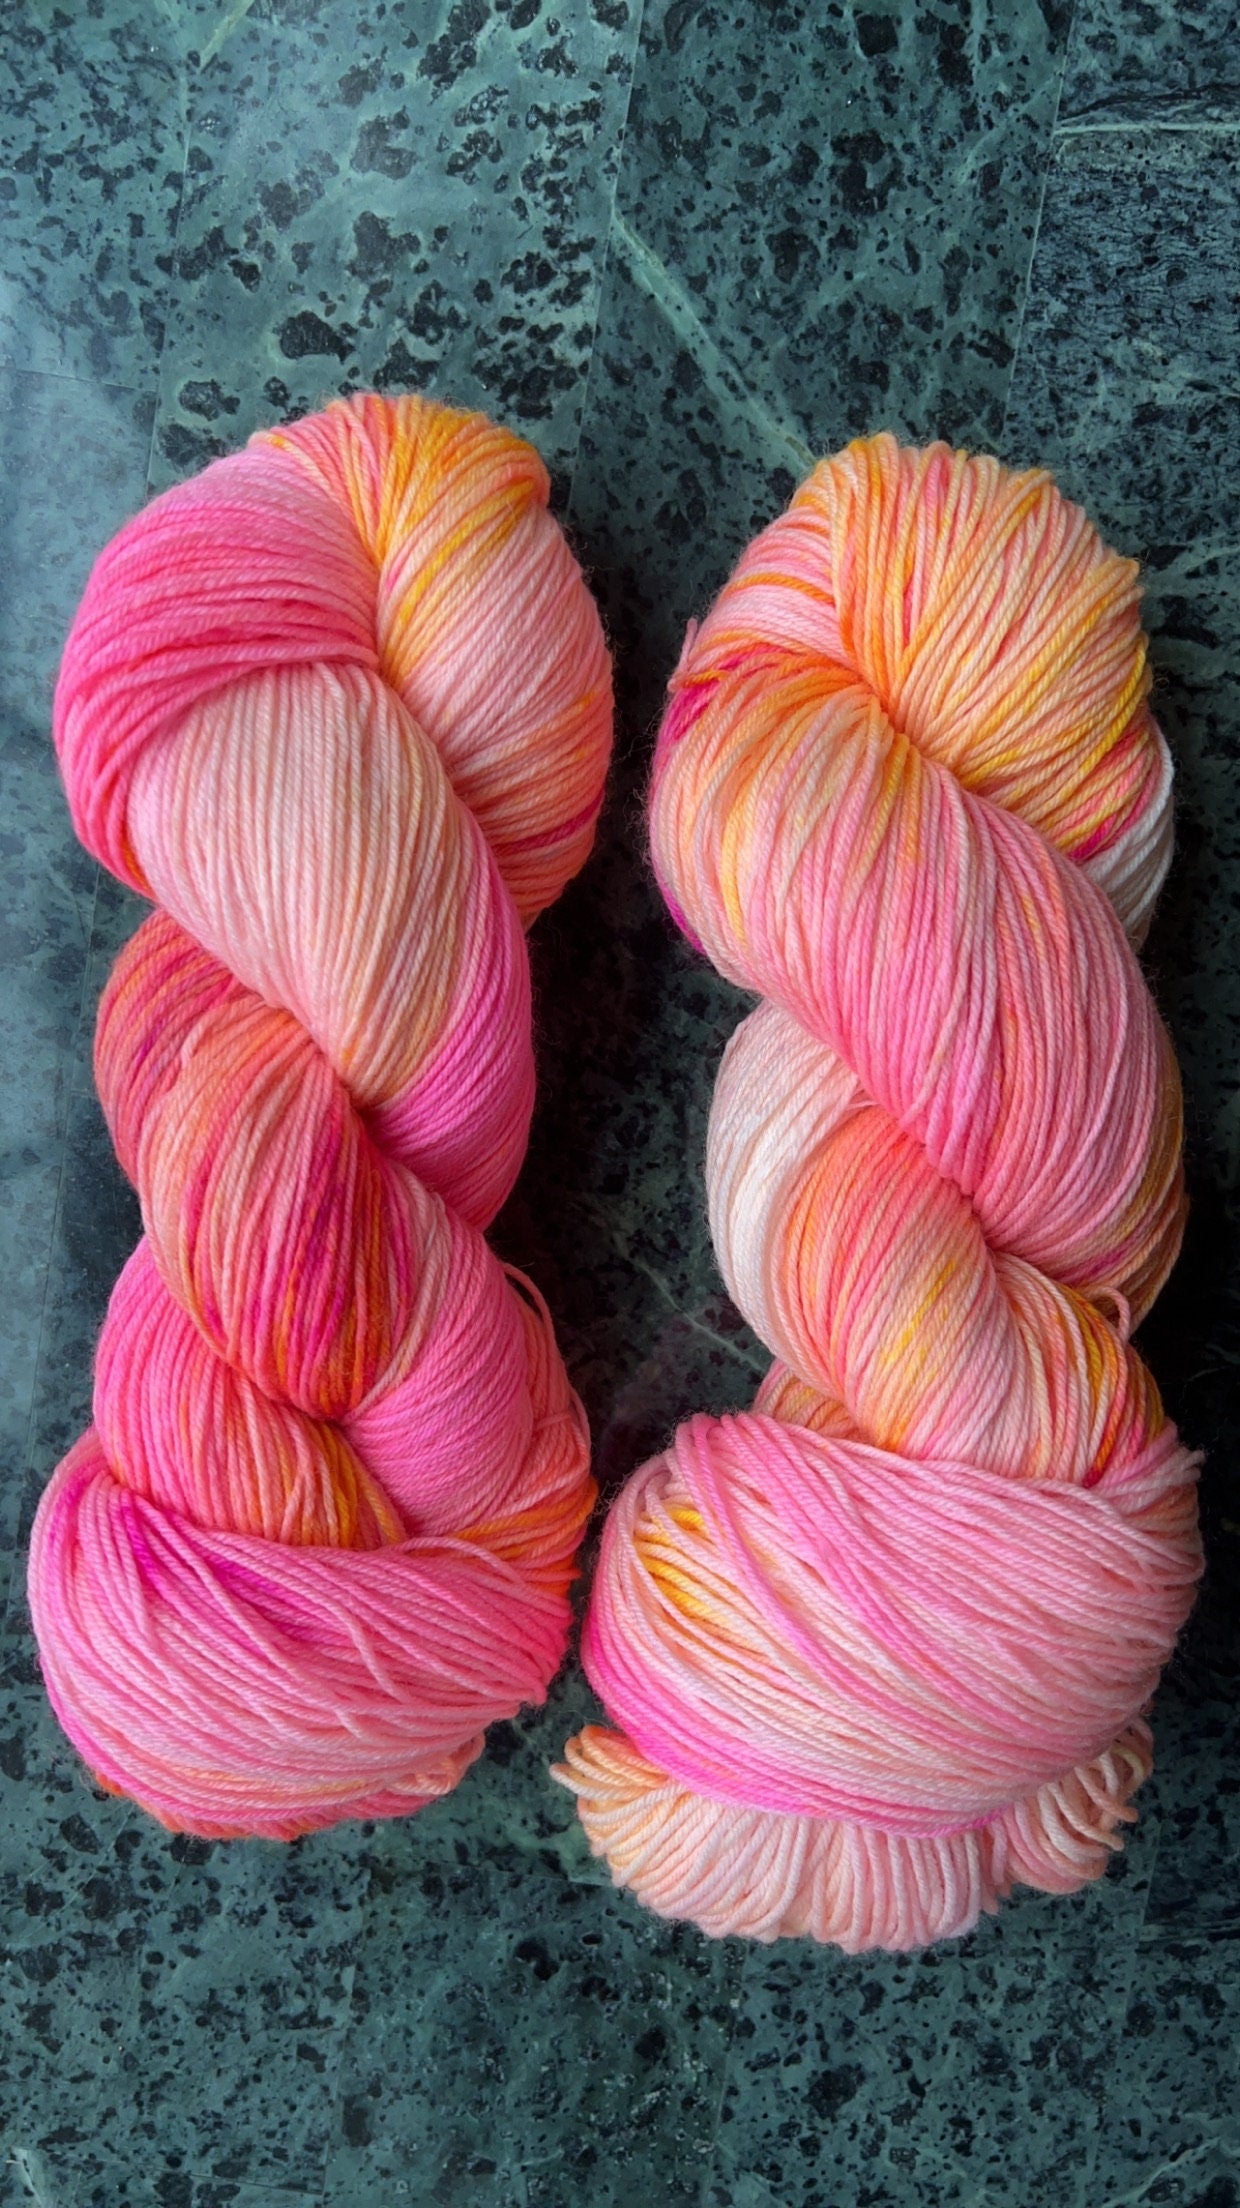 Hand-Dyed Merino Wool Yarn - Soft and Durable Yarn for Knitting and Crocheting | Indie Dyed Merino Wool | Fingering | Bahama Mama